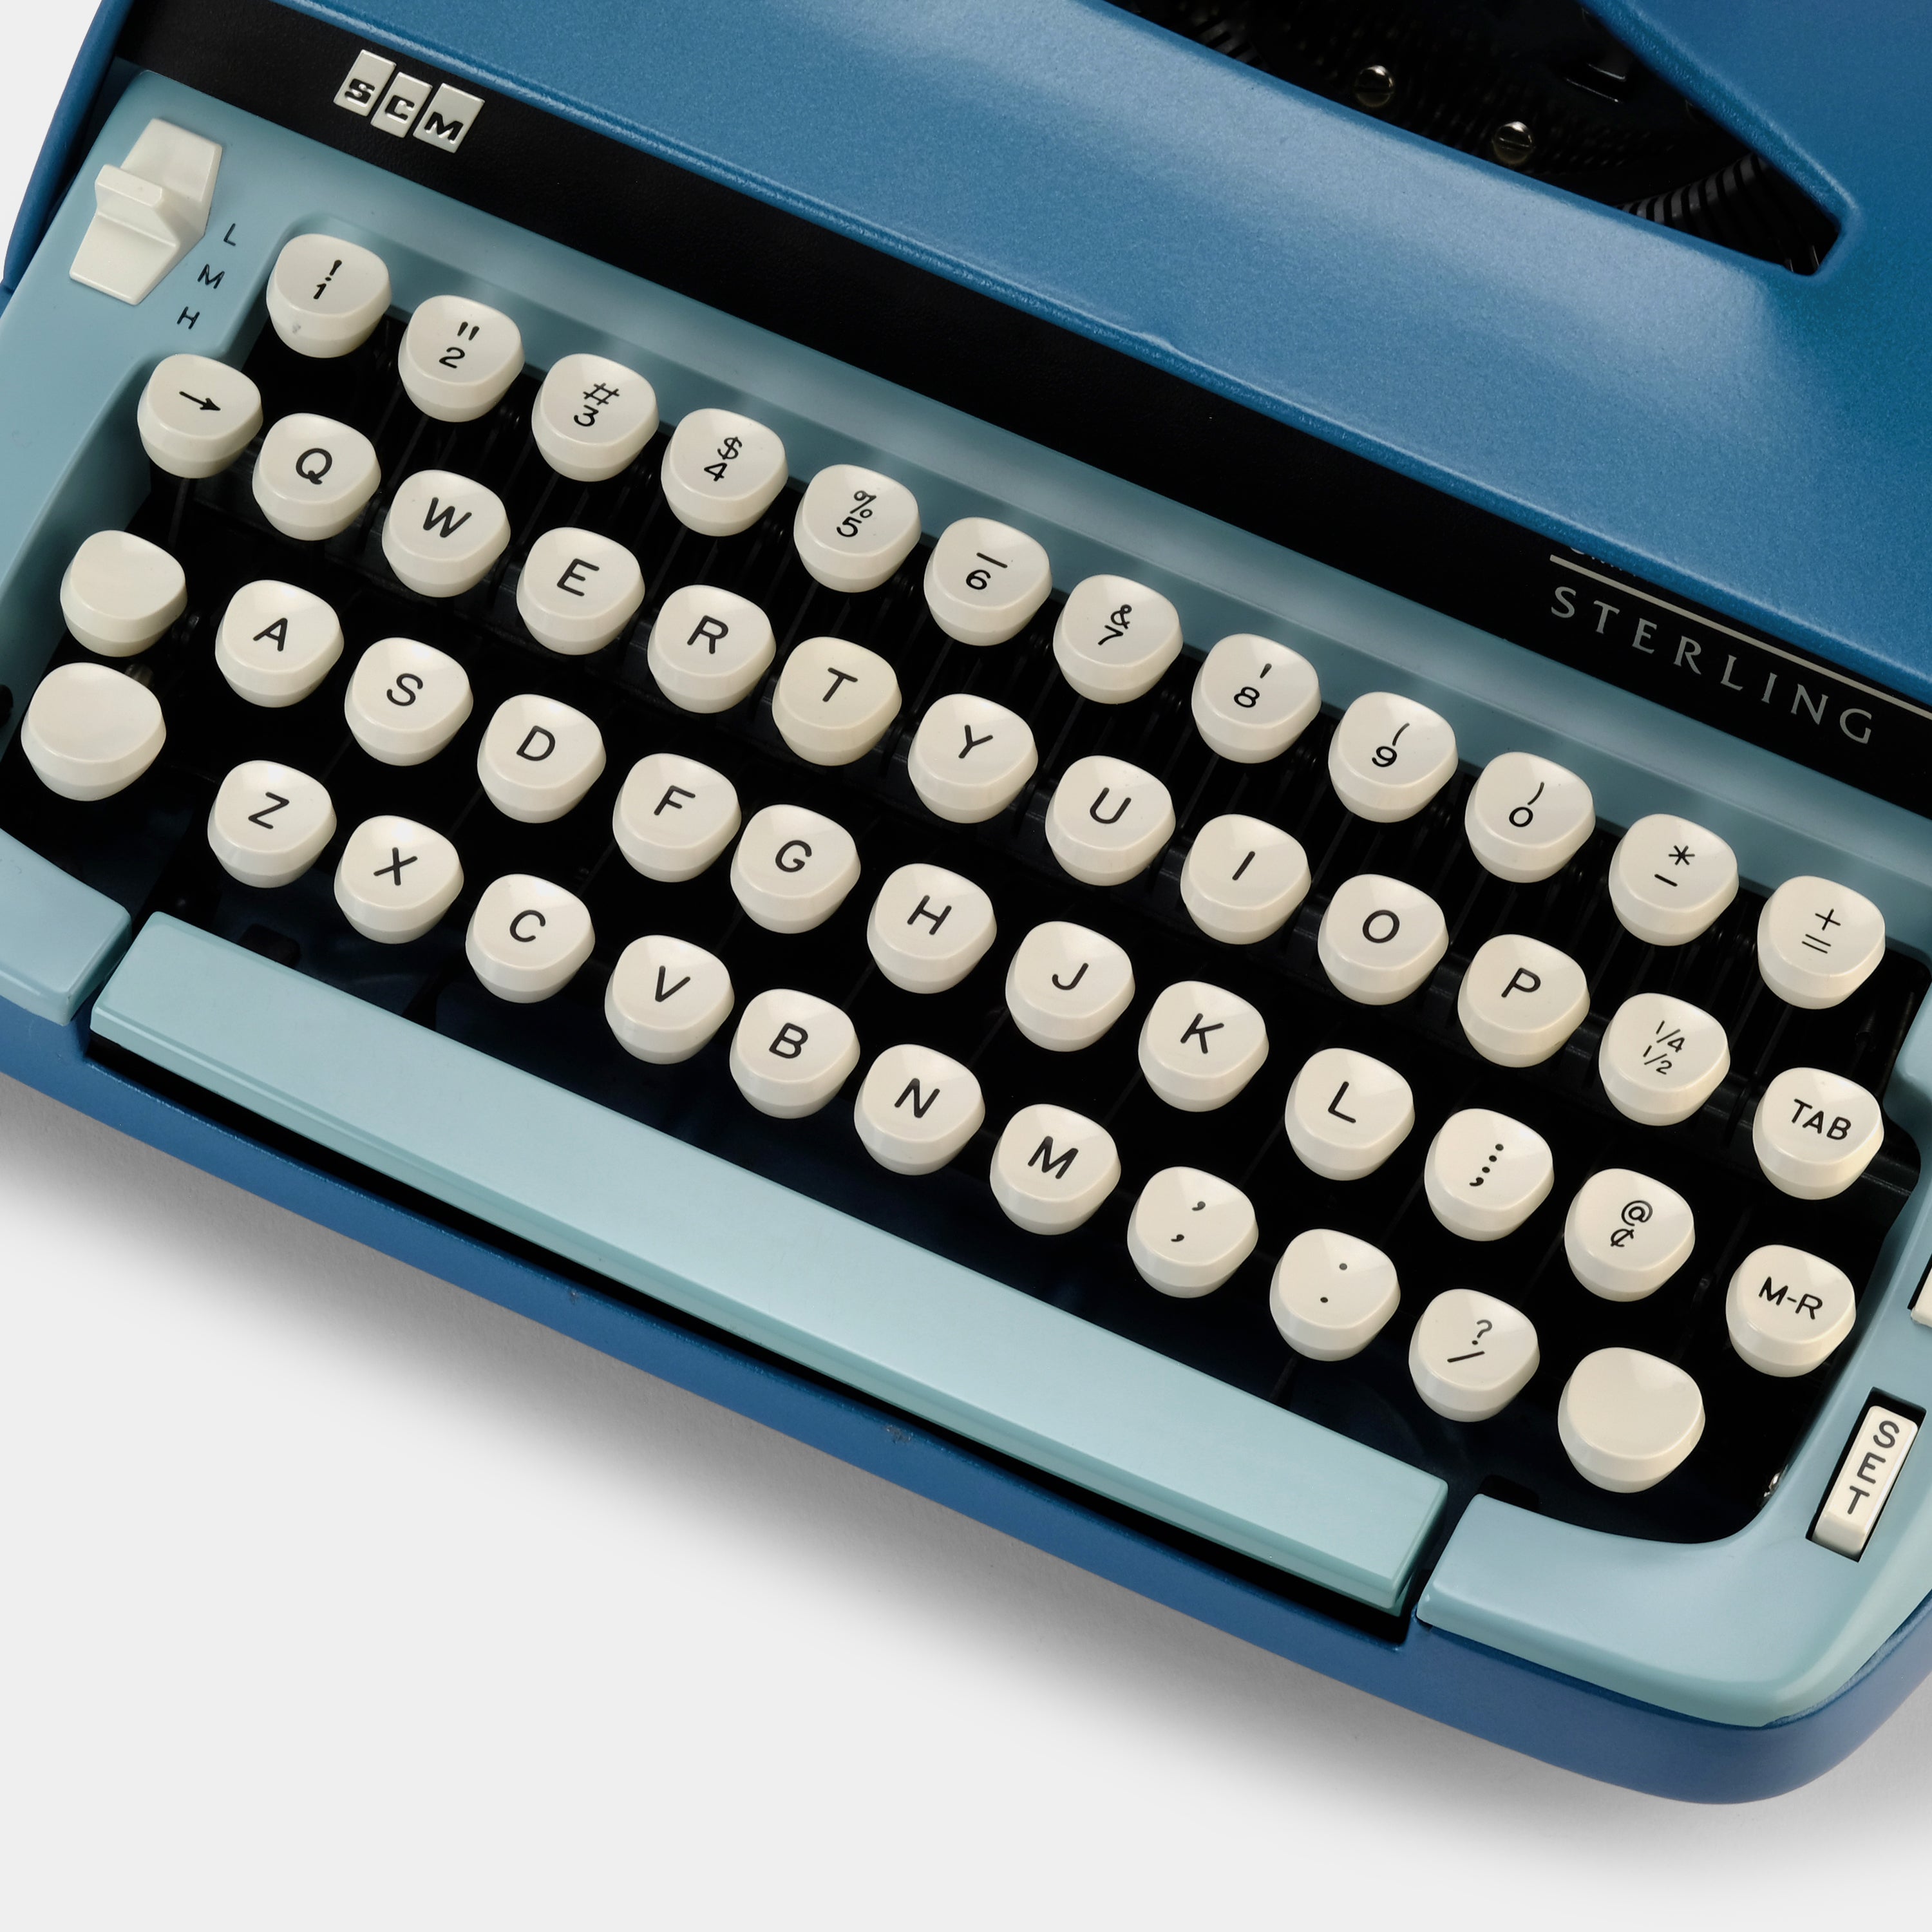 Smith-Corona Sterling Sky Blue Manual Typewriter